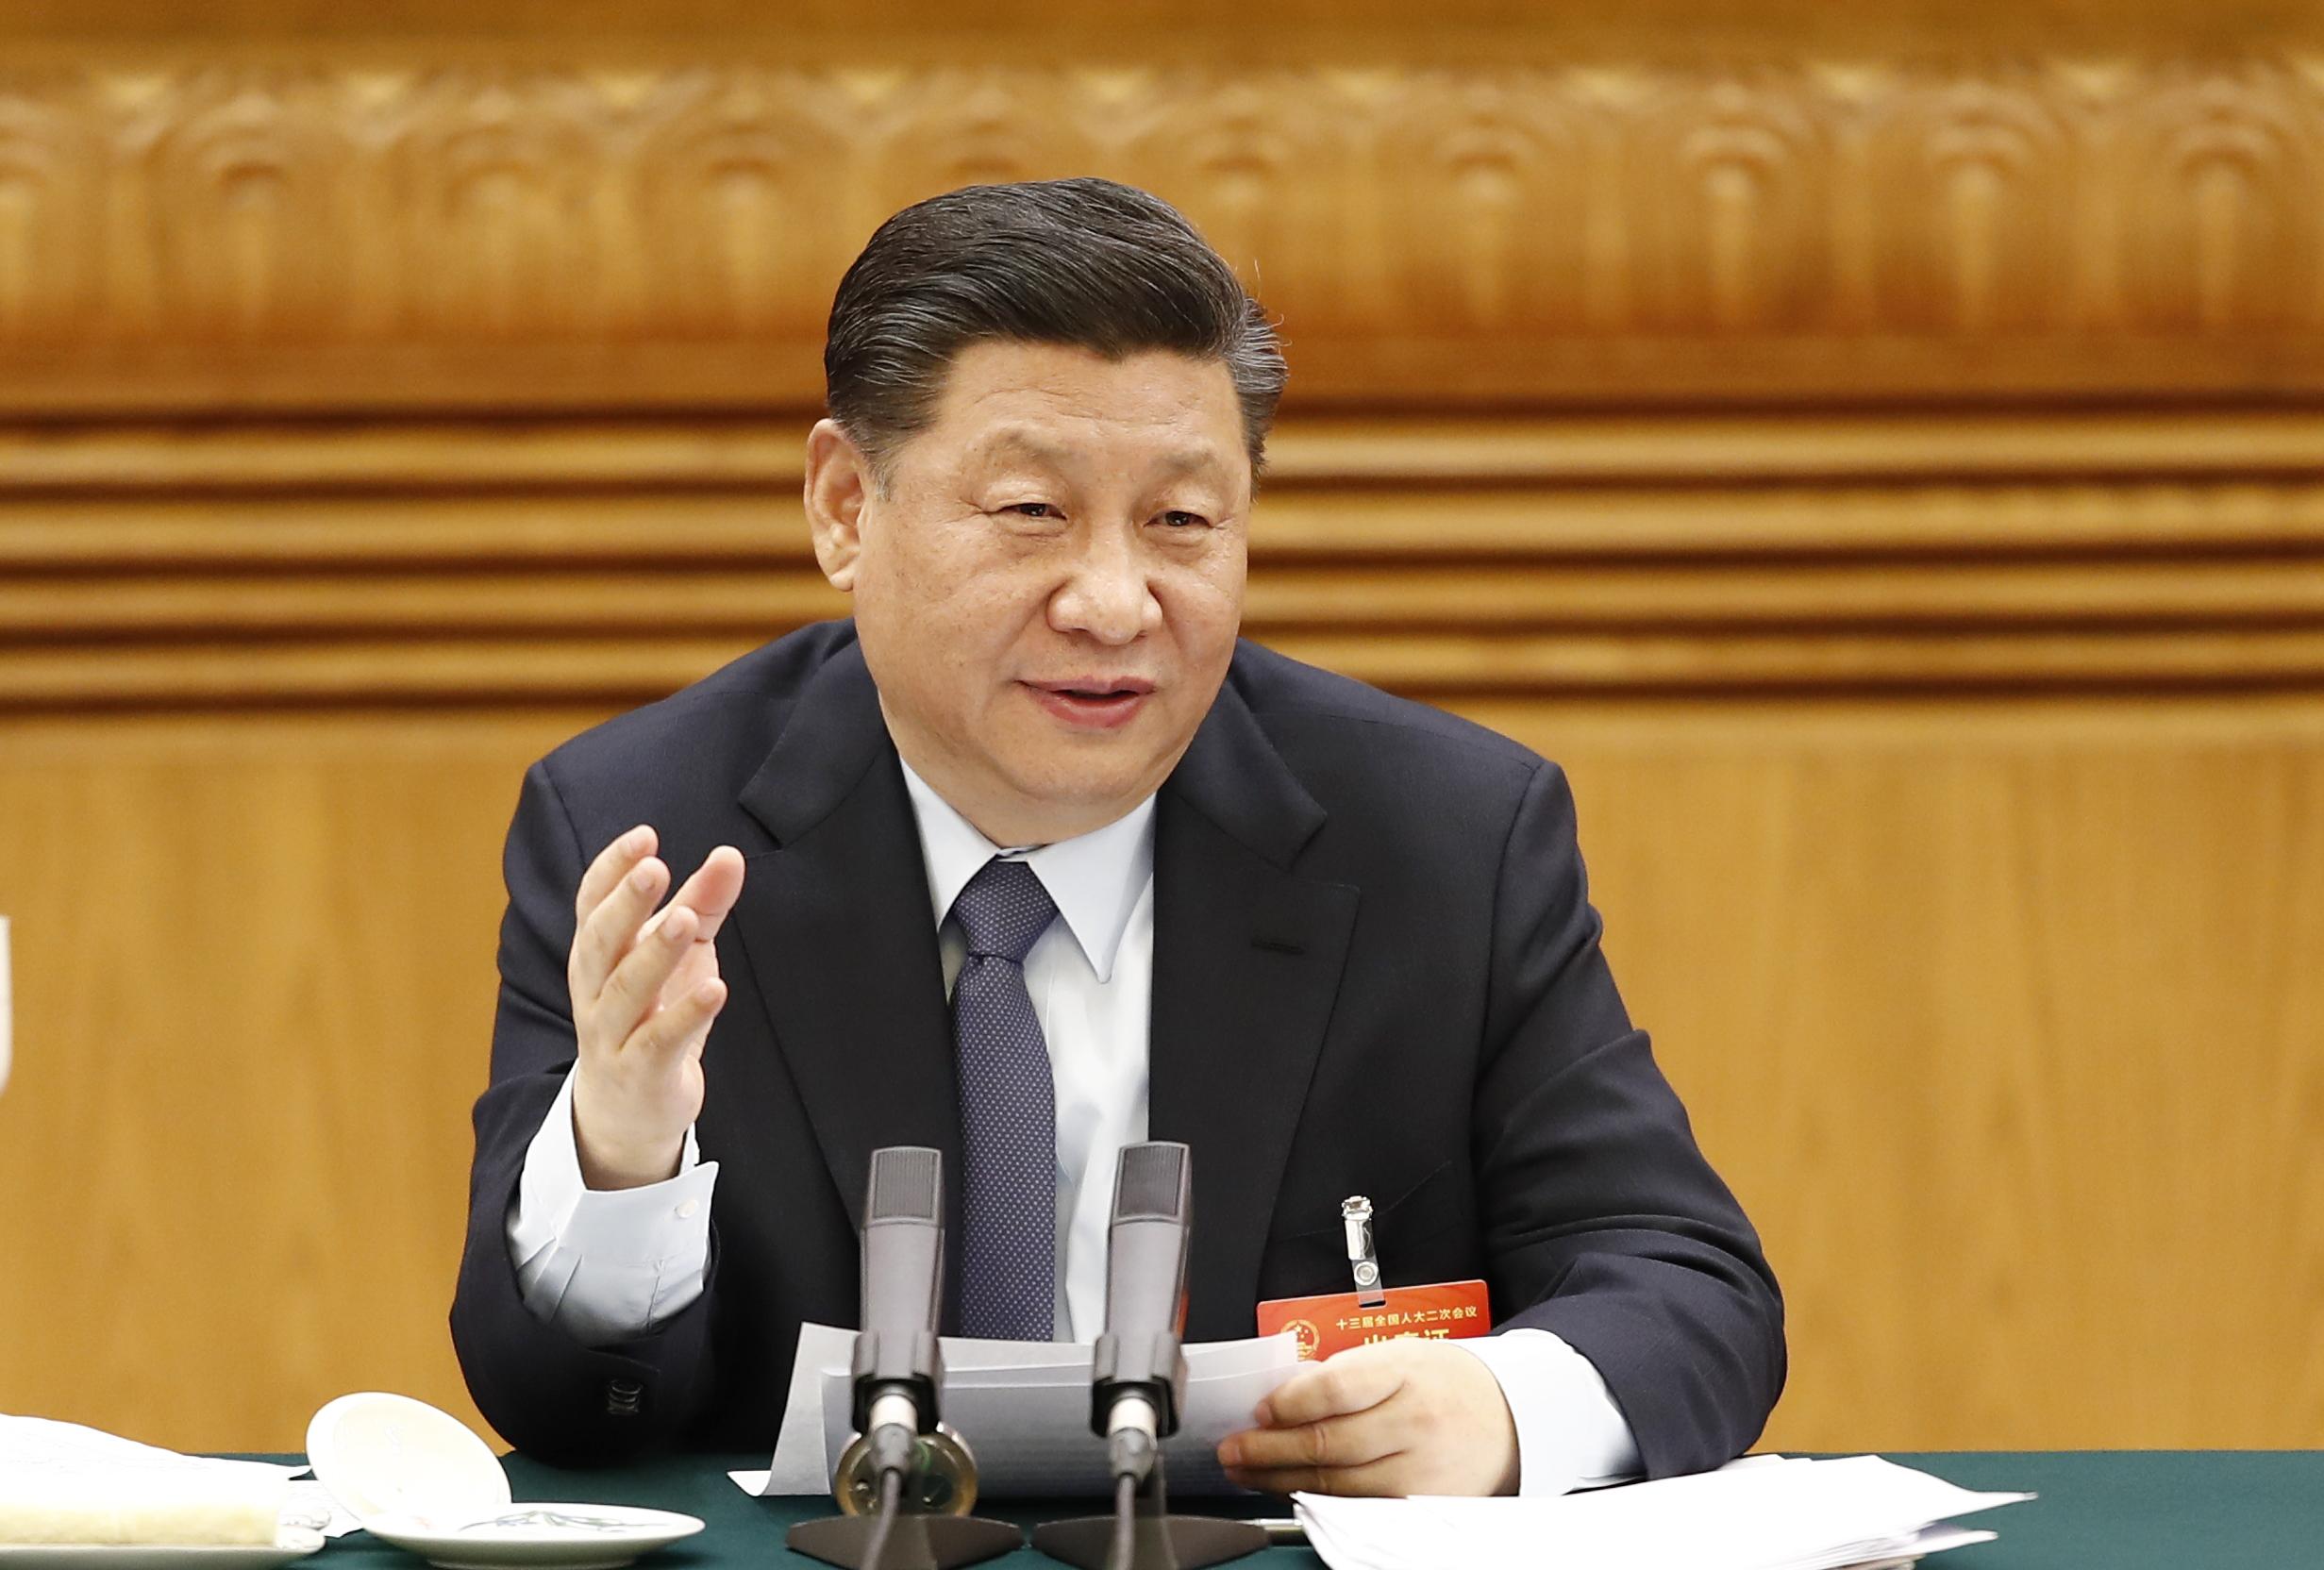 Gray leap forward: Xi Jinping shows natural hair color in a rare ...